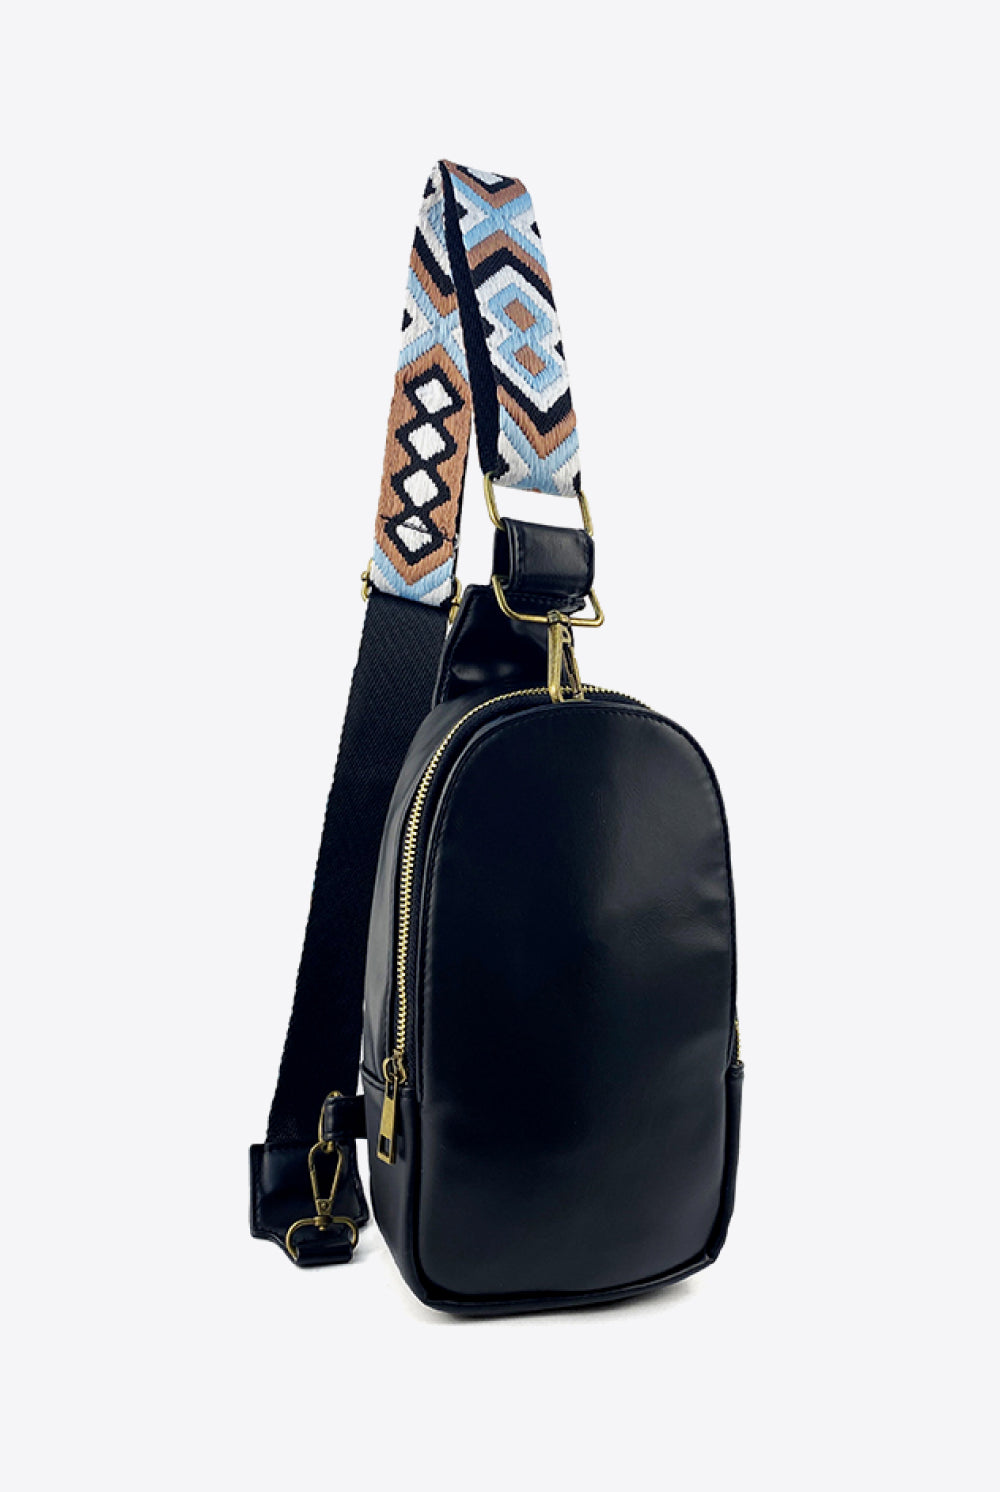 Black Random Pattern Adjustable Strap PU Leather Sling Bag Handbags